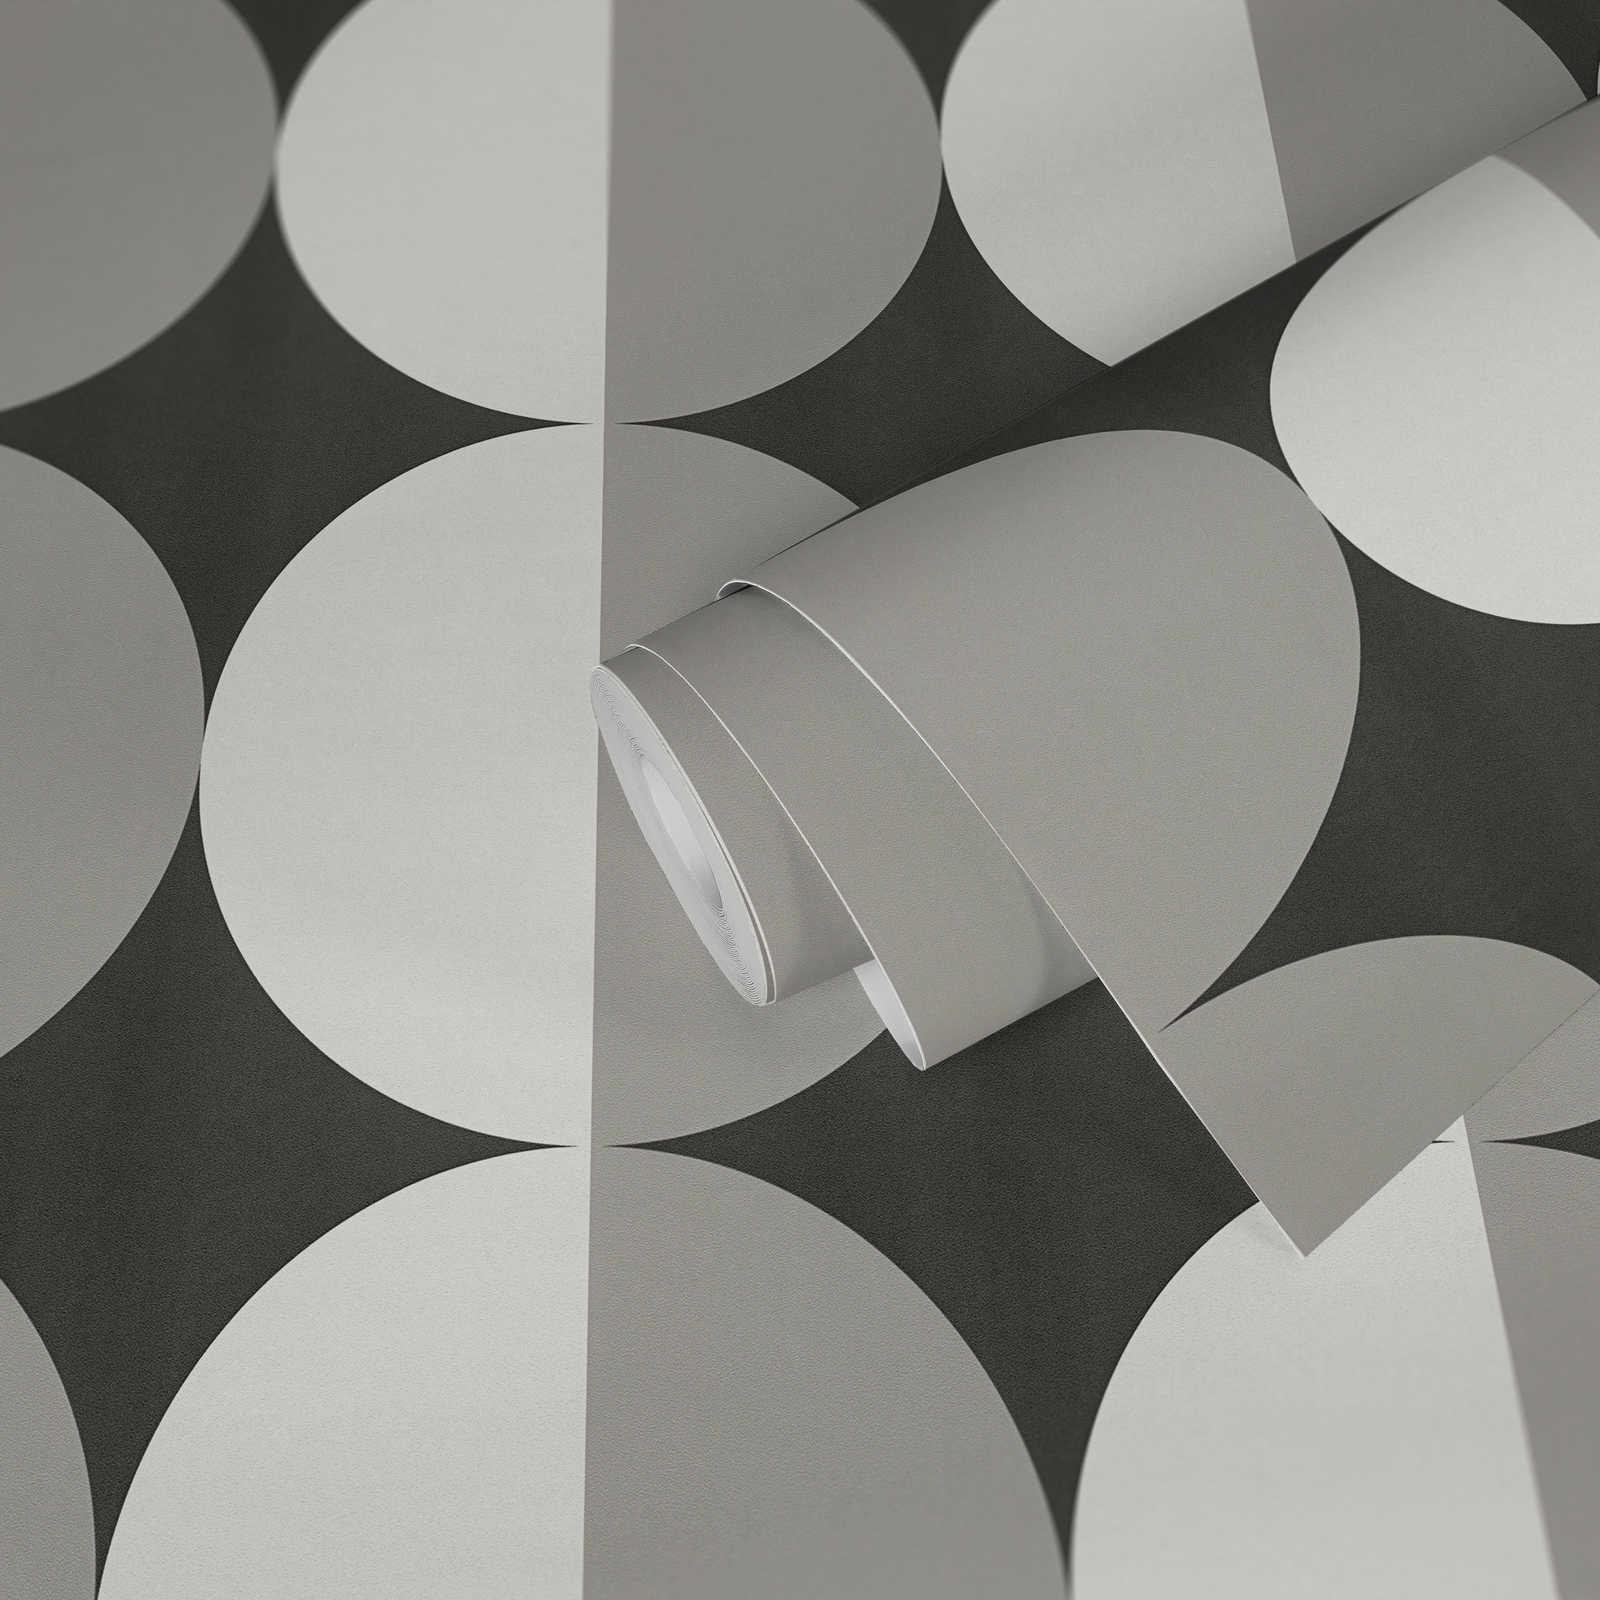             Retro non-woven wallpaper with graphic circle pattern - black, white, grey
        